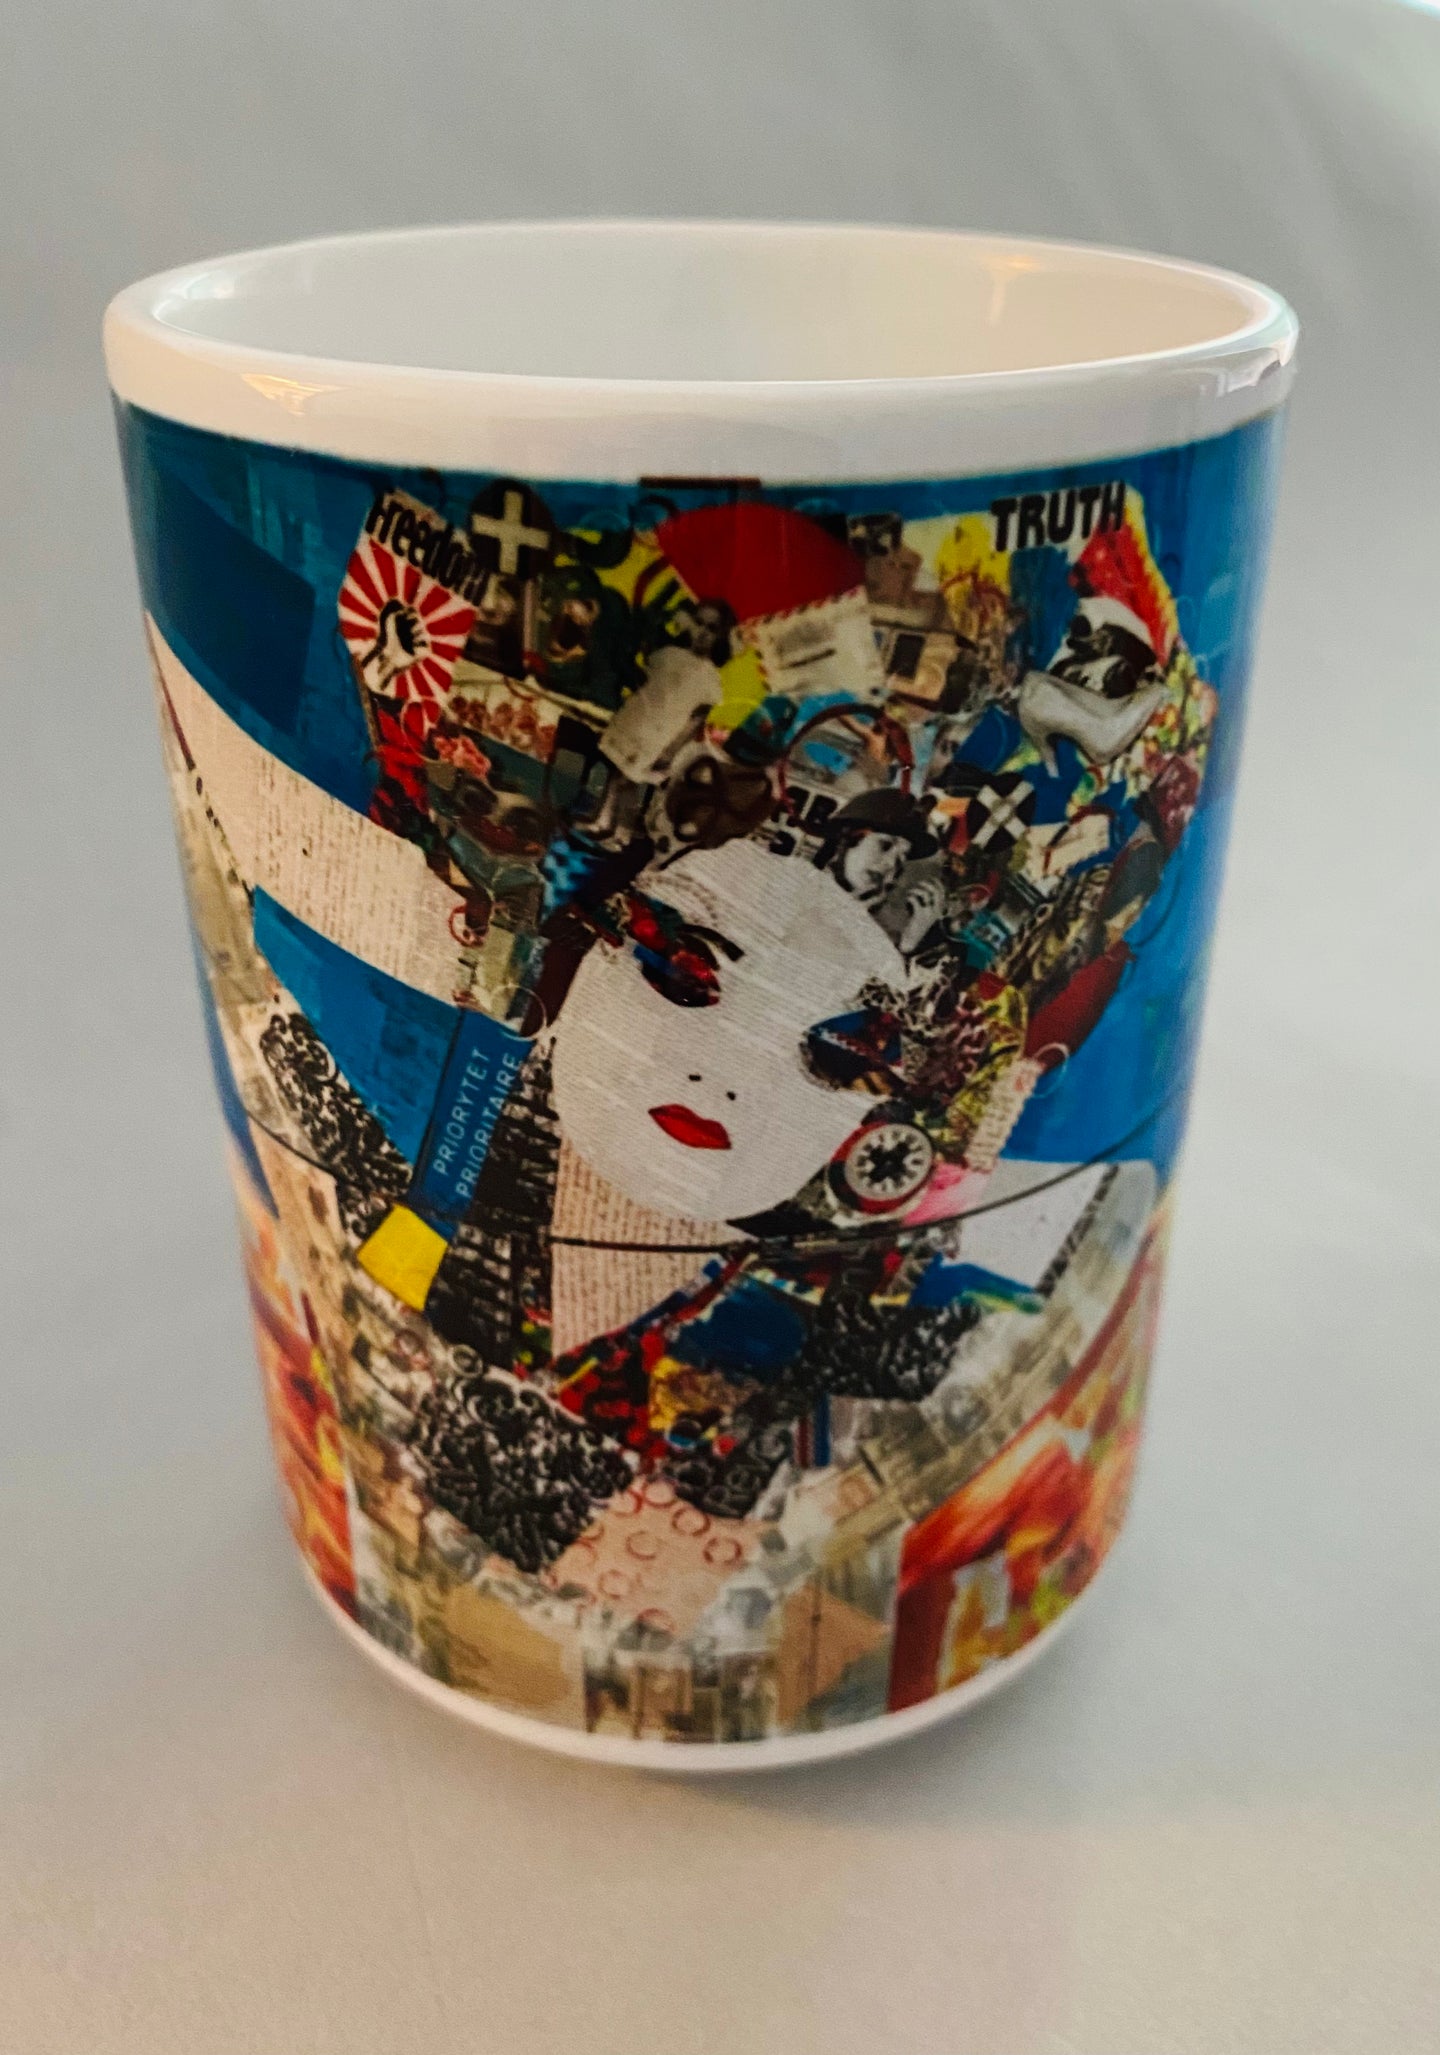 Ola Rondiak printed coffee mug